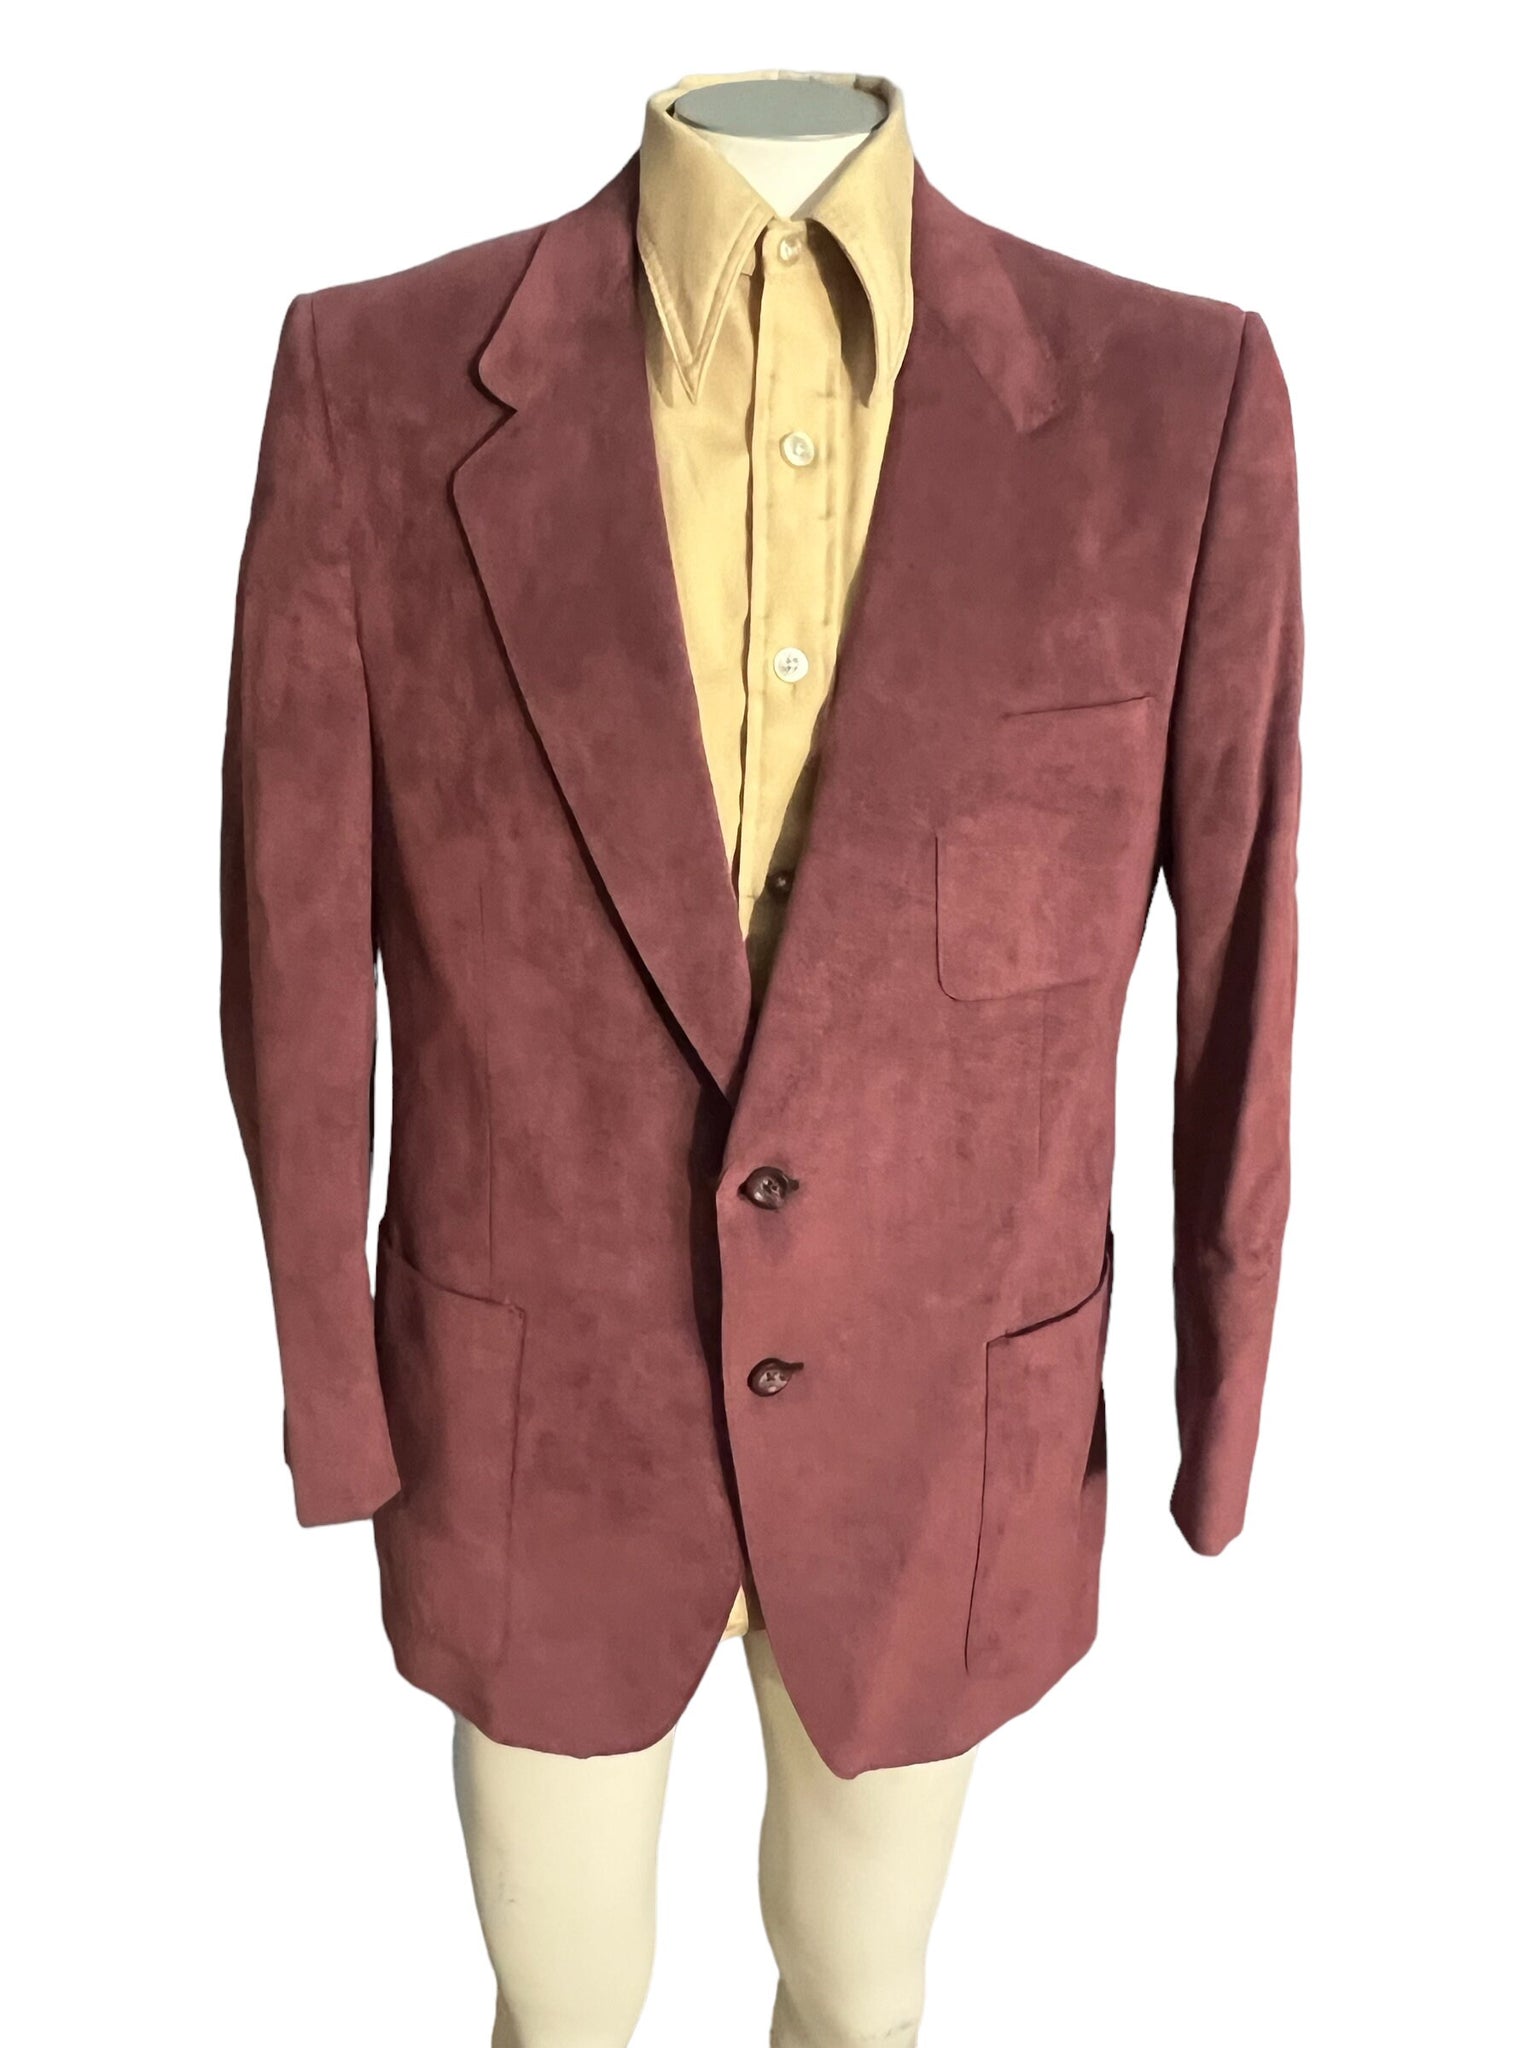 Vintage purple ultra suede Suit jacket 42 Thos Stuart